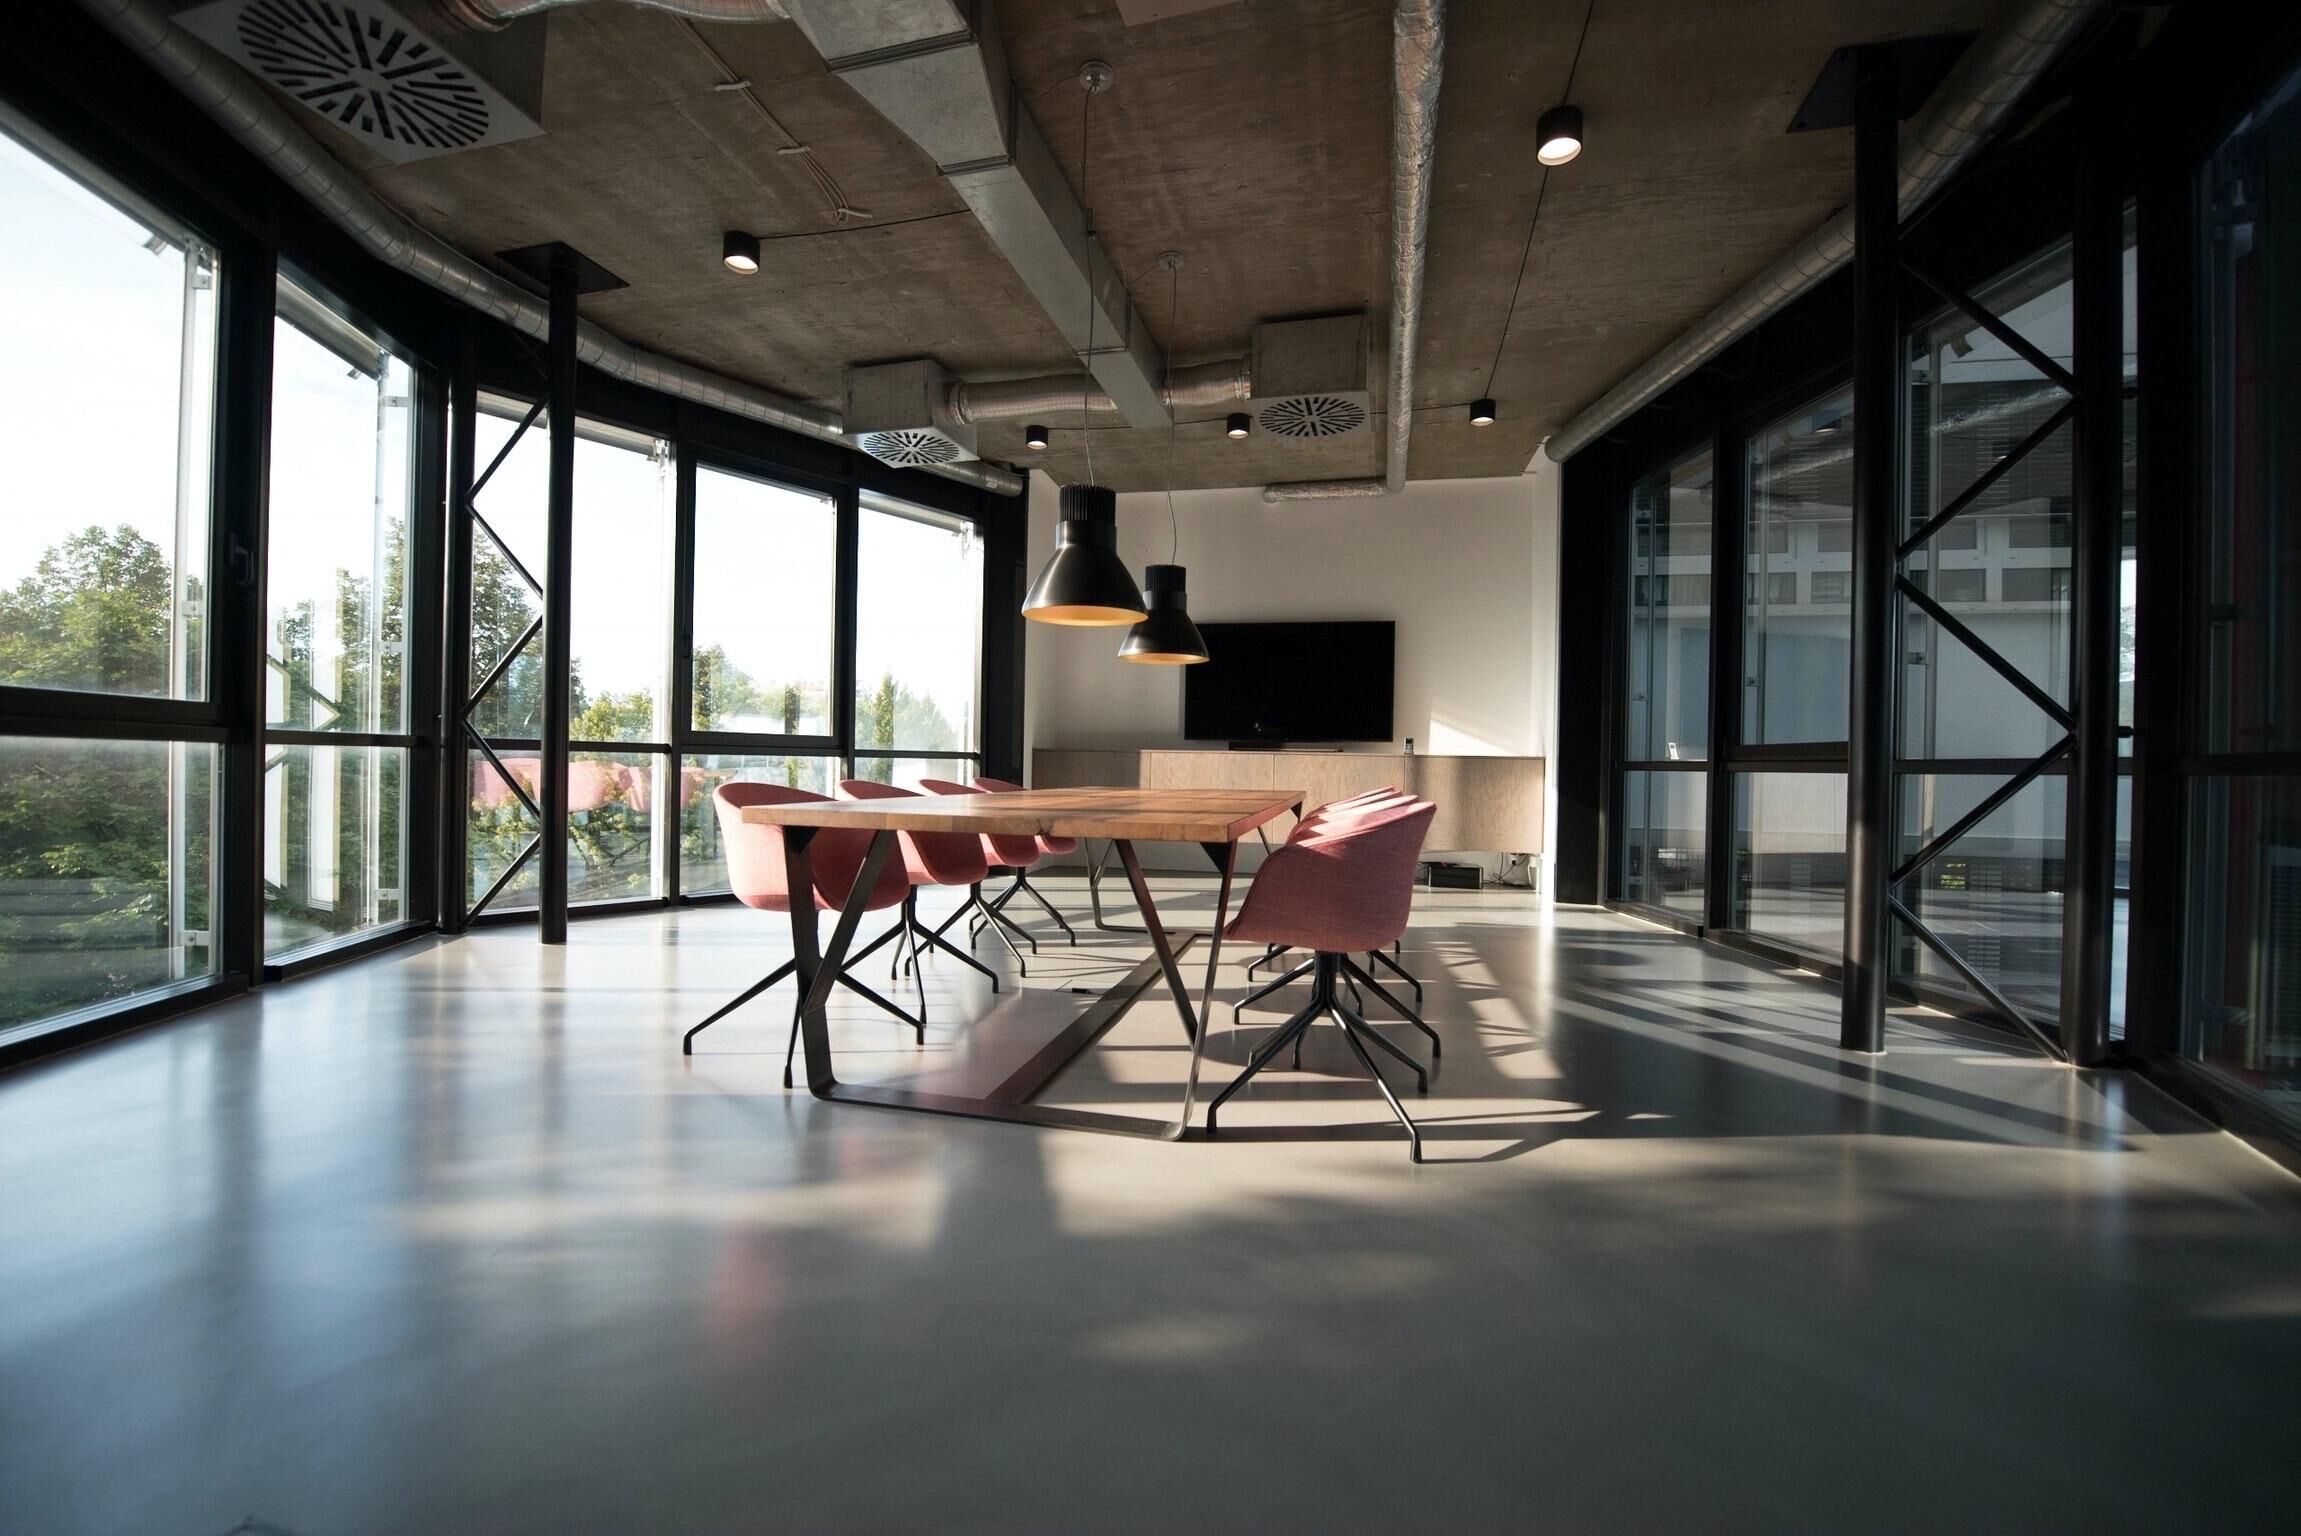 Choosing the right builders when refurbishing an office